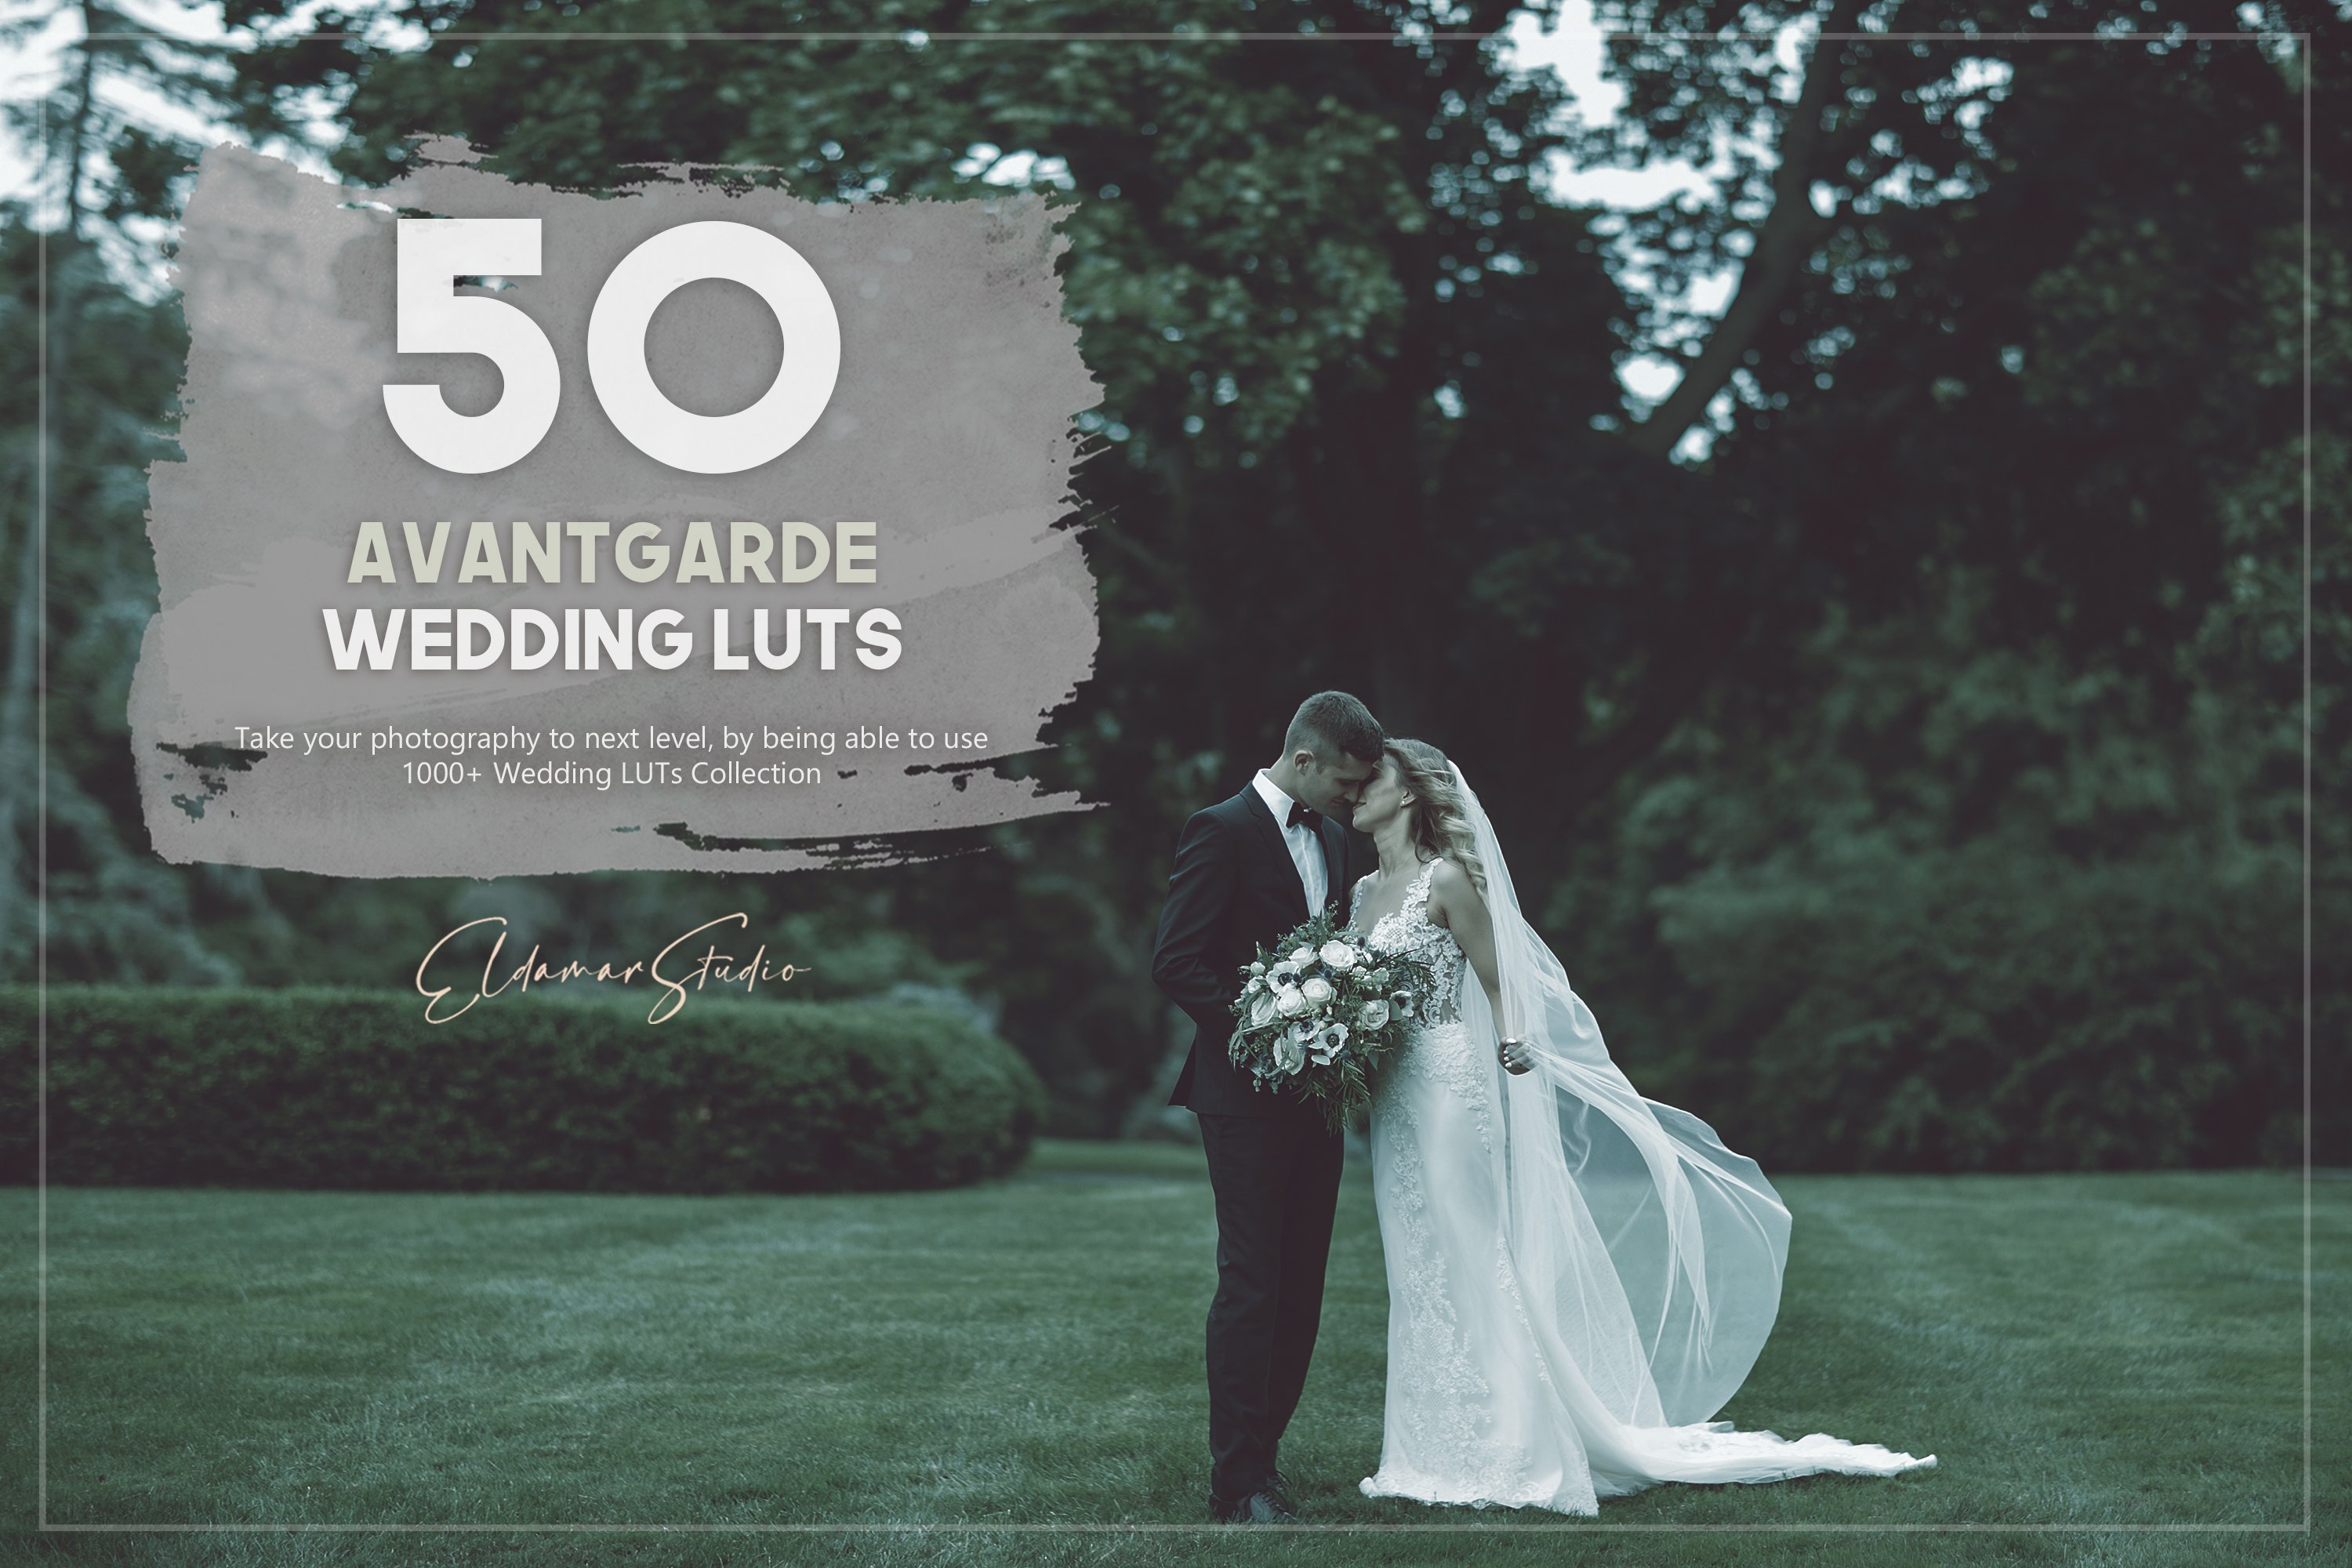 50 Avantgarde Wedding LUTs Packcover image.